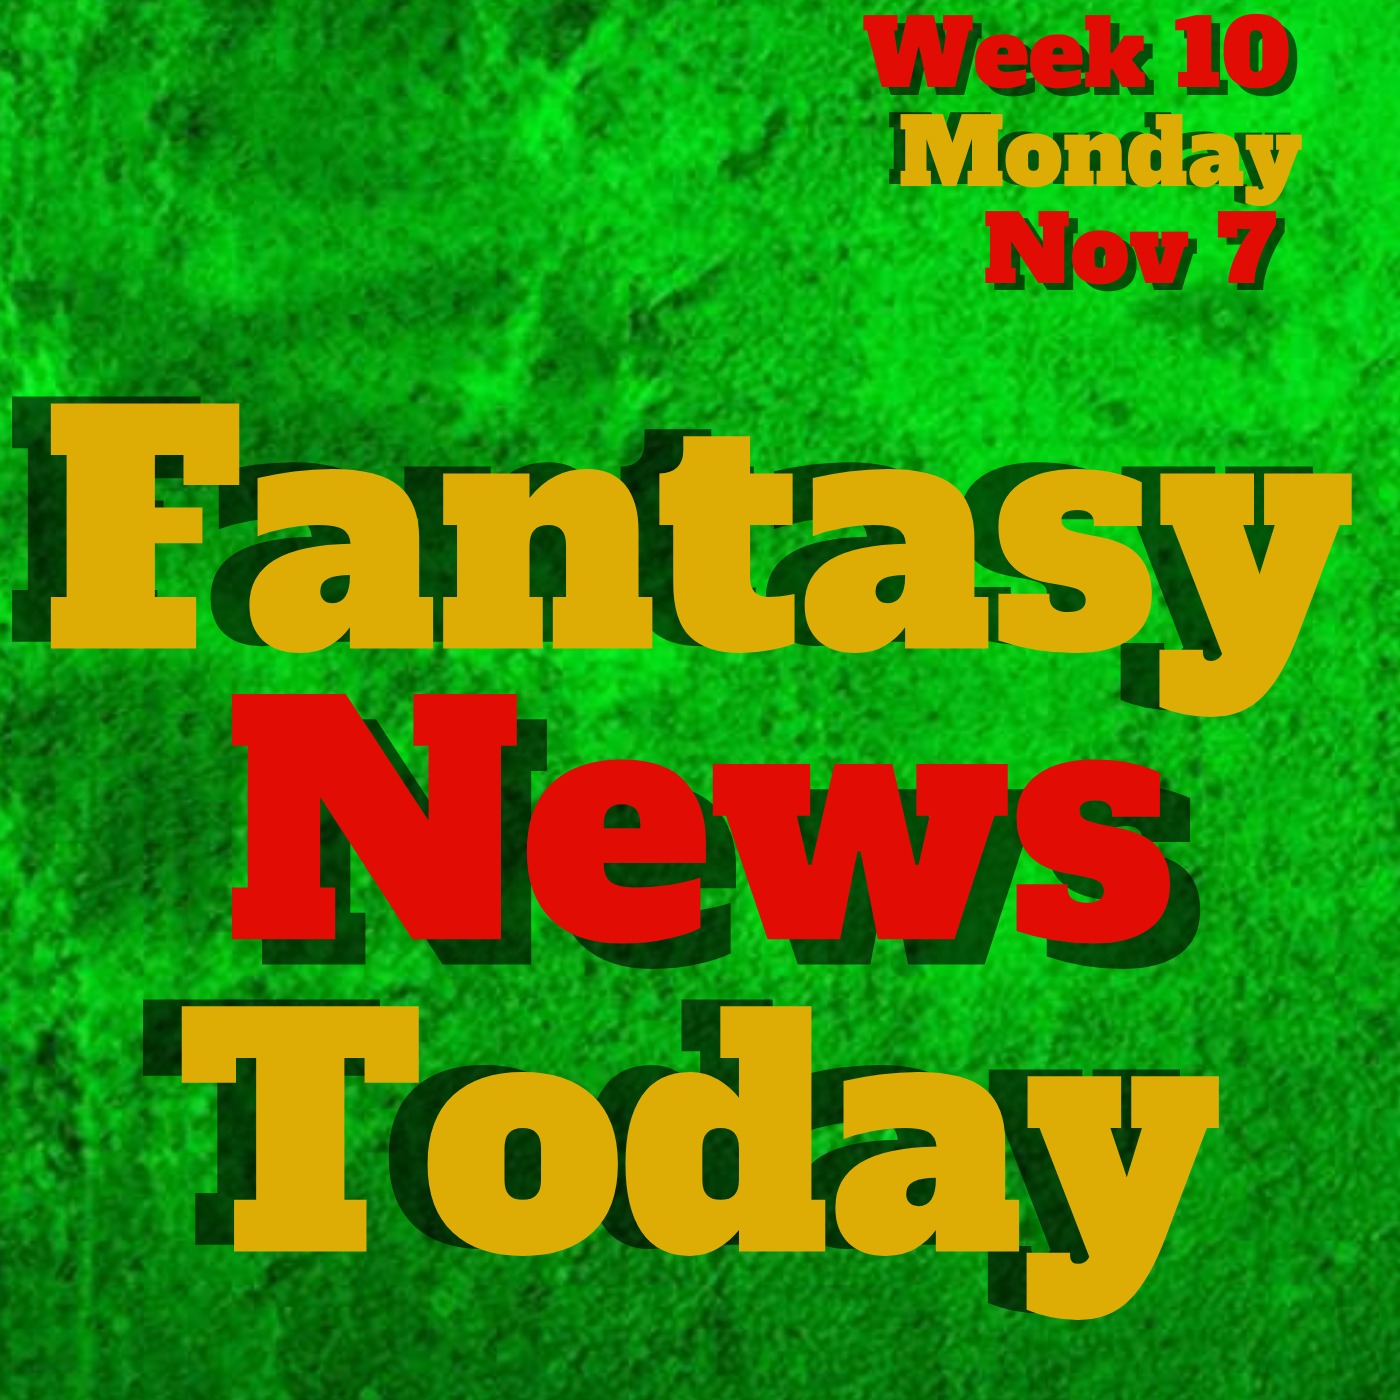 Fantasy Football News Today LIVE | Monday November 7th 2022